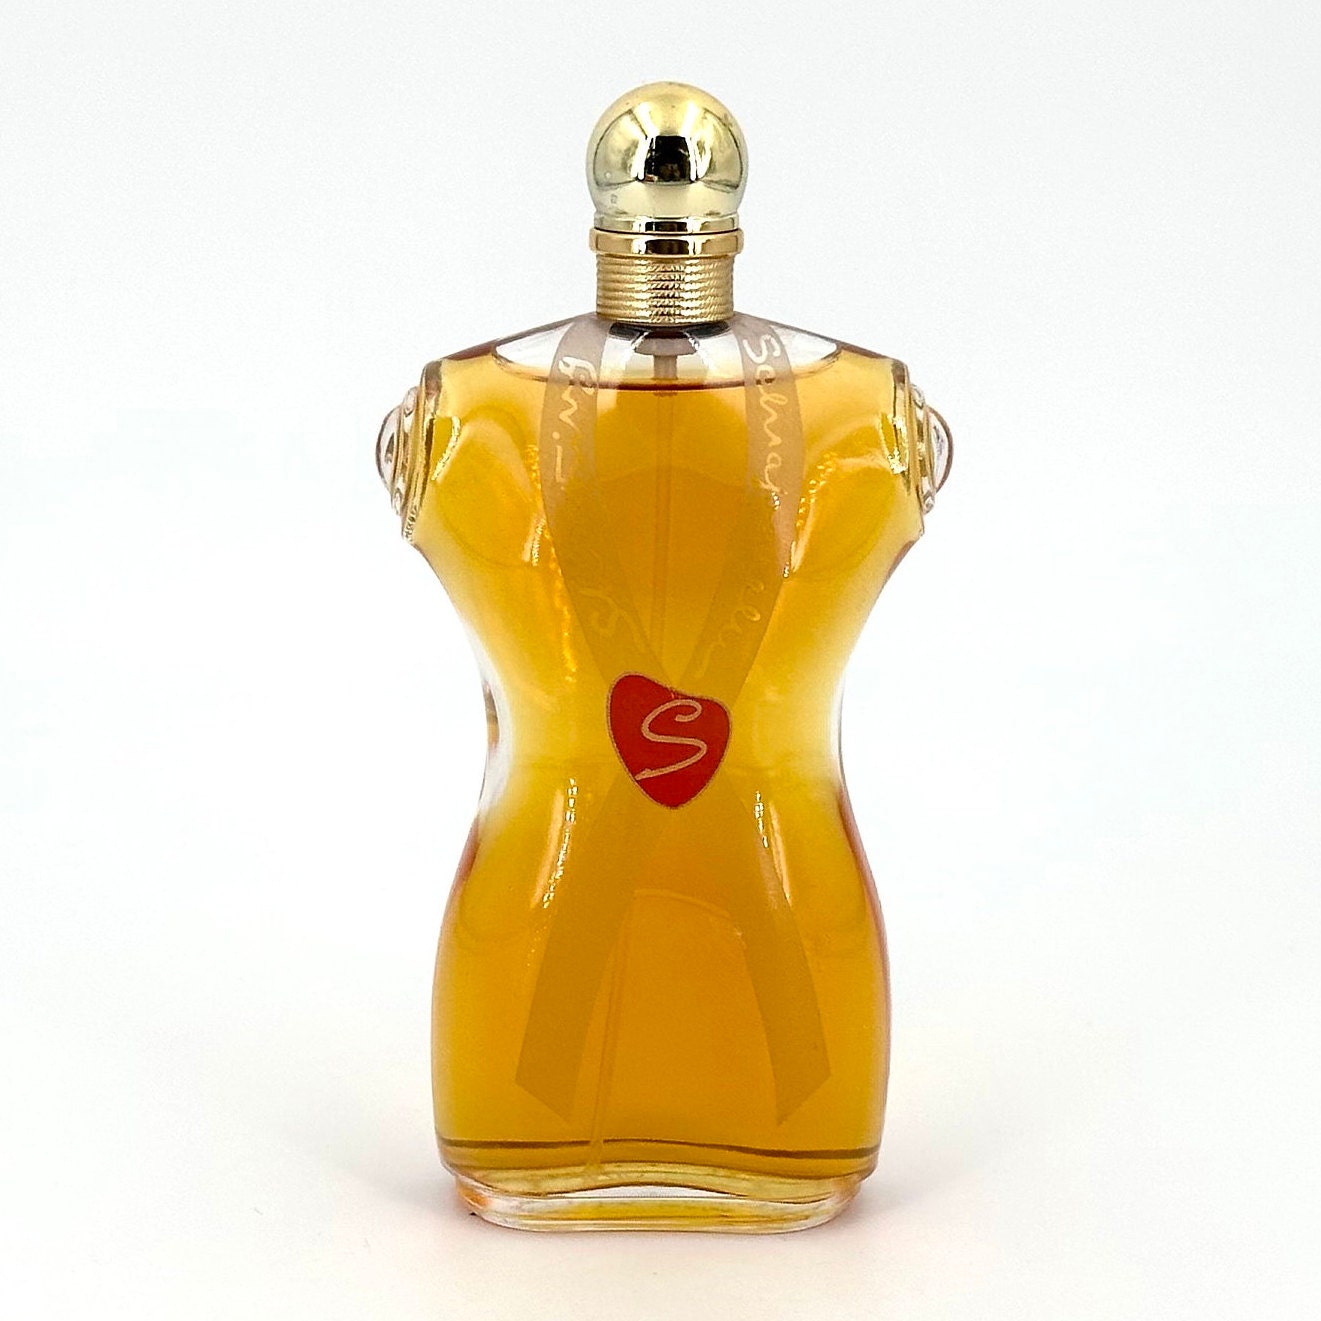 Diffuseur de parfum Goatier Absolu - fire & ice - 100ml - Goa